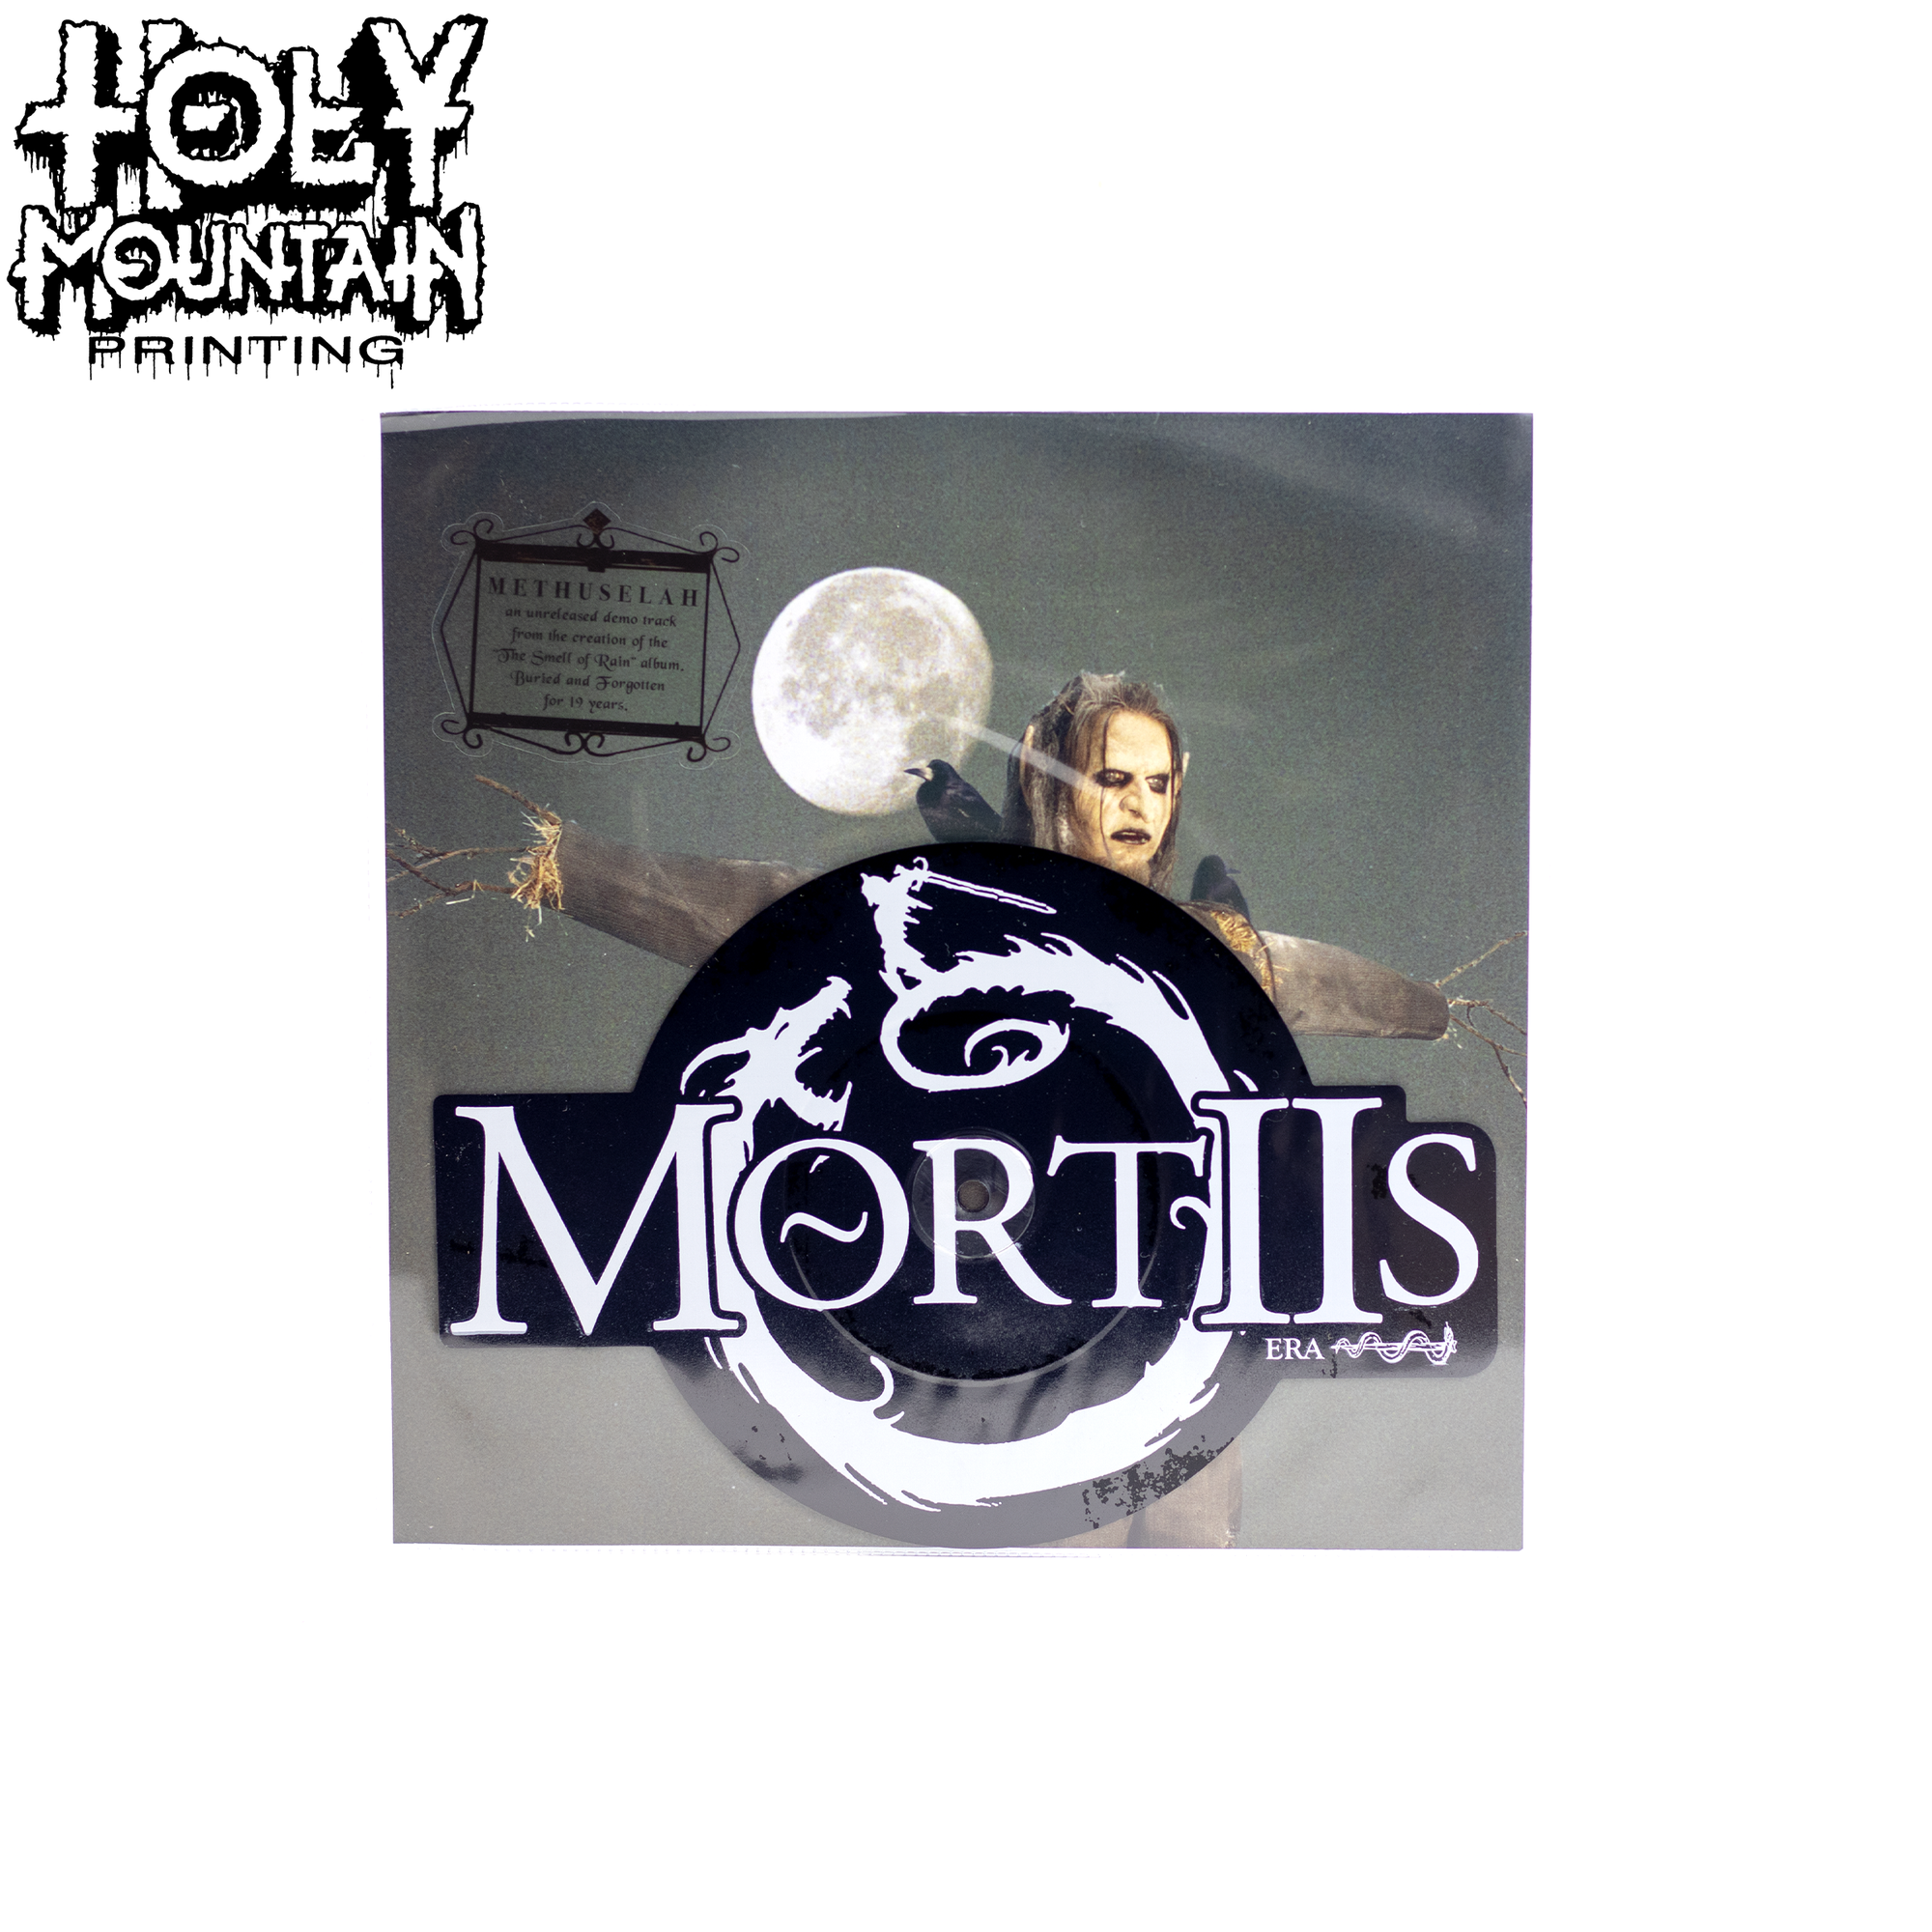 MORTIIS "Methuselah" 7 Inch Vinyl Record